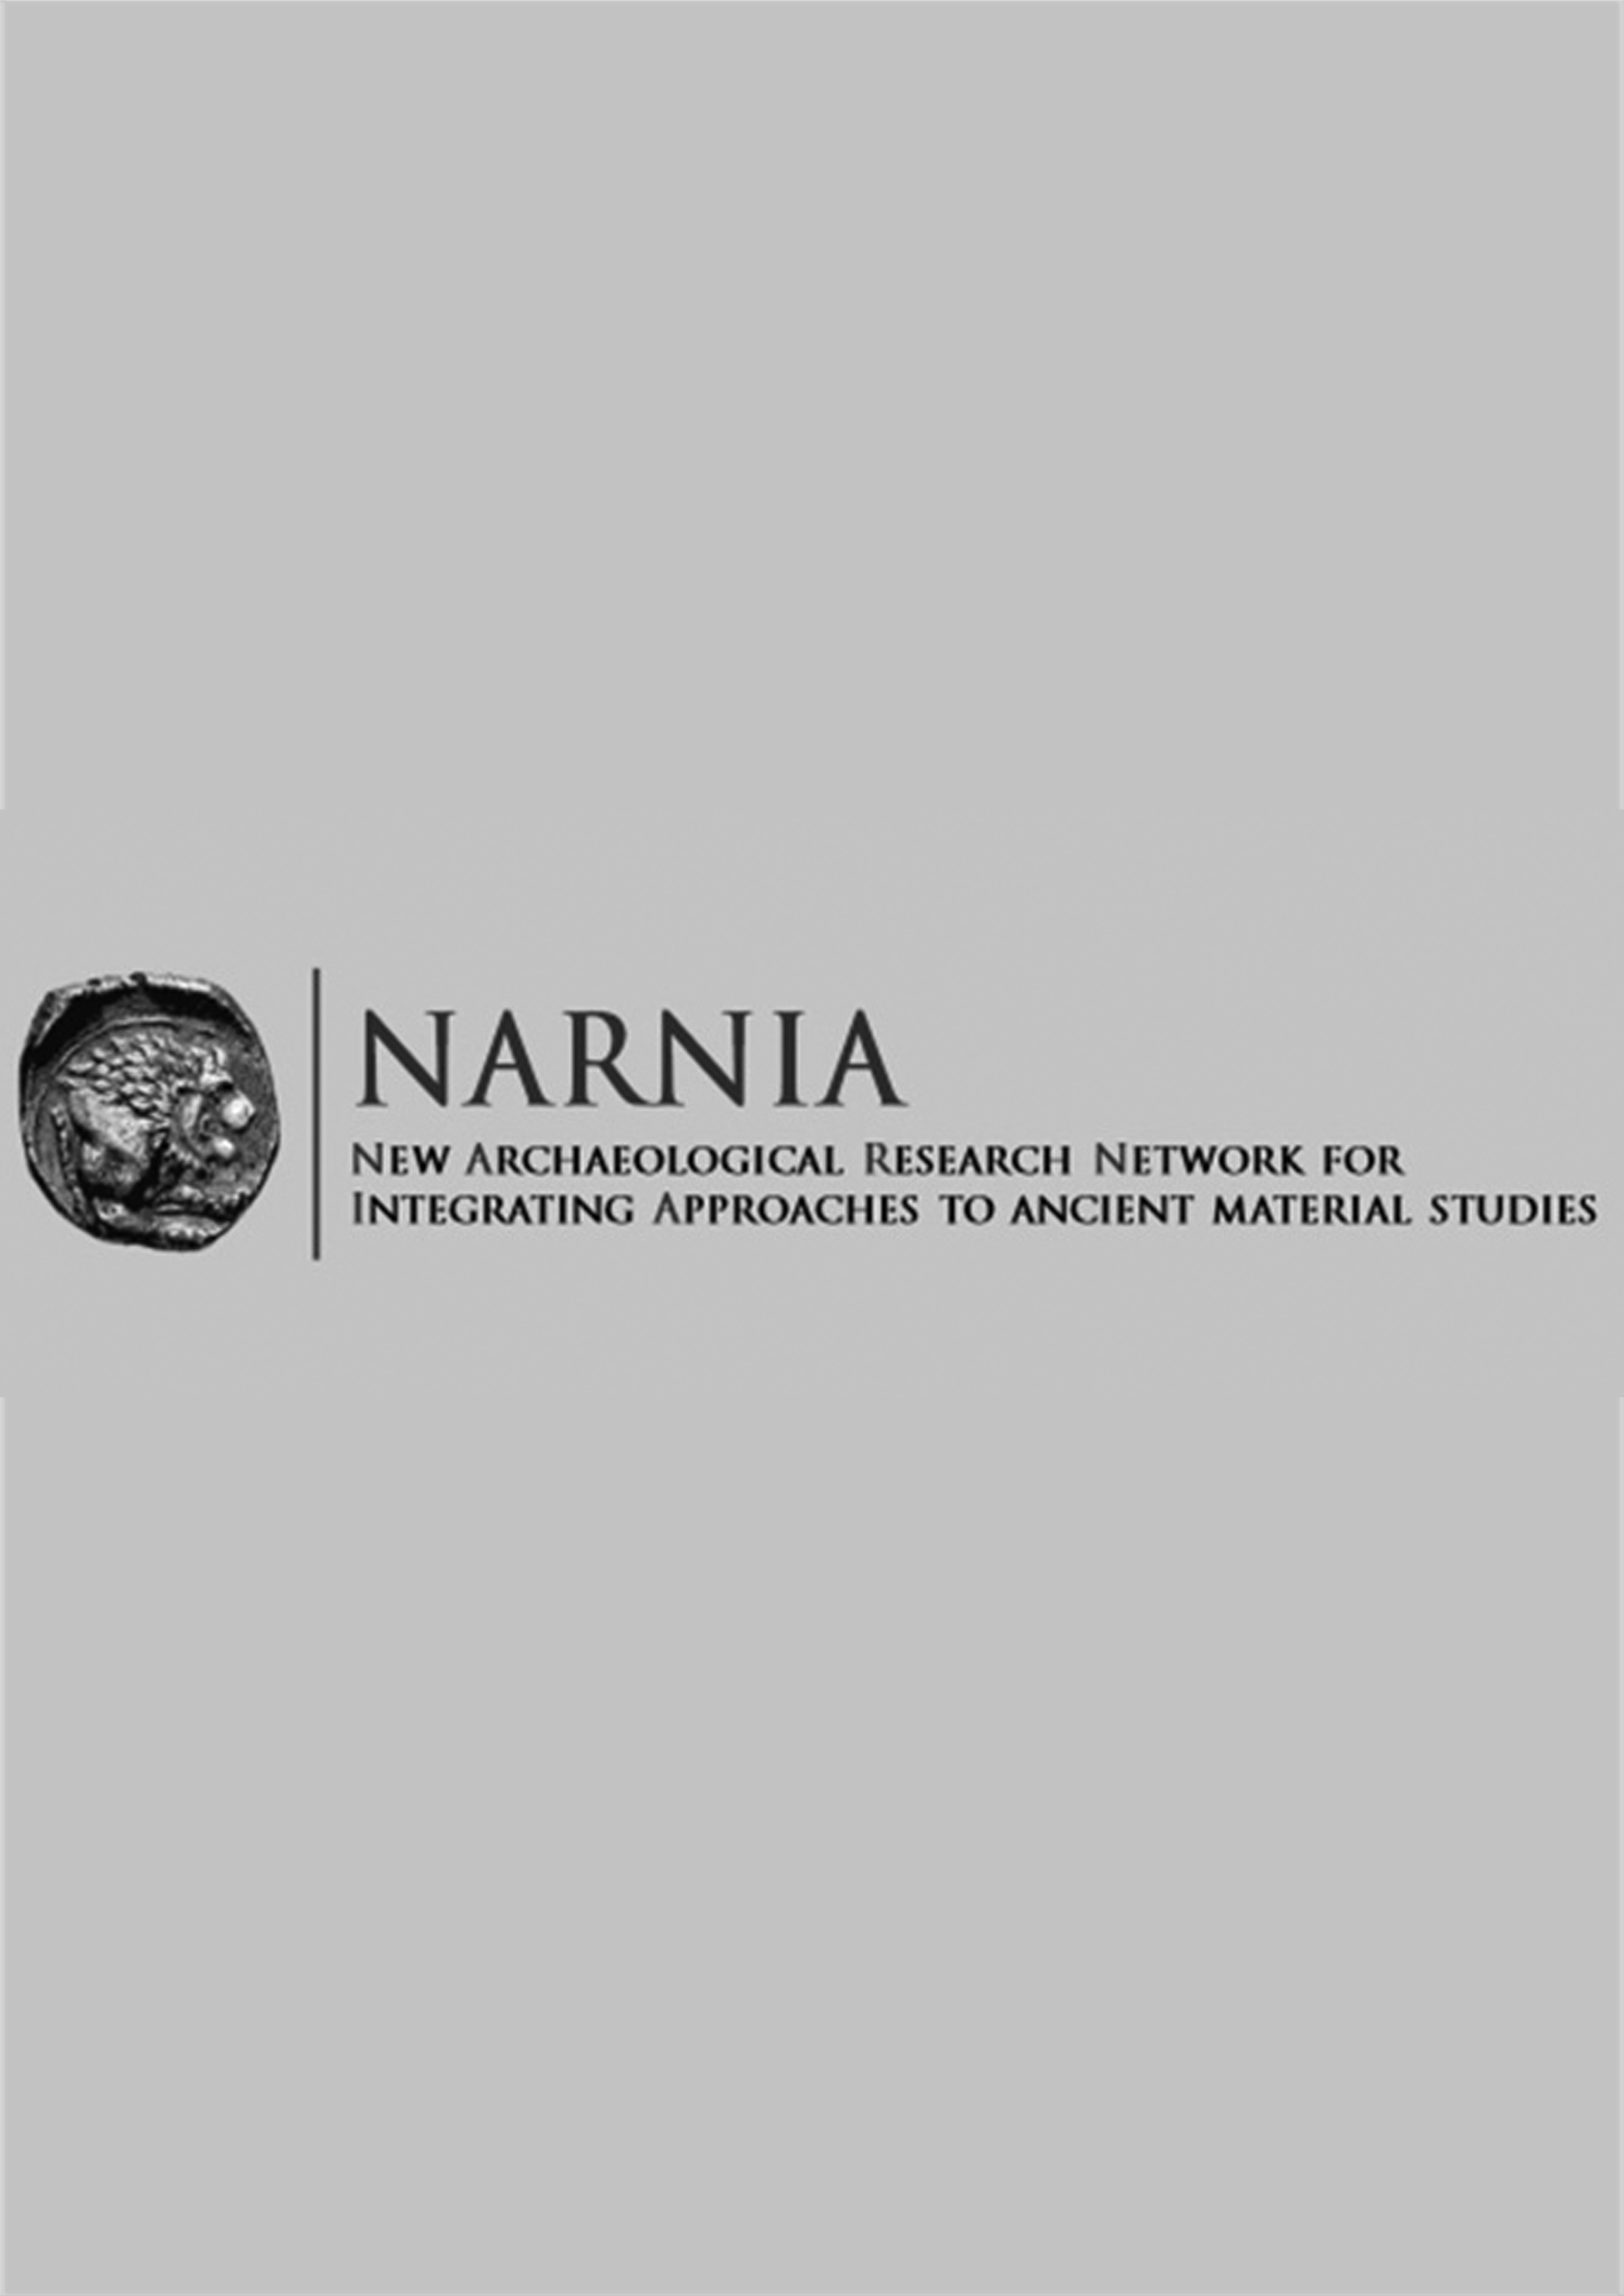 NARNIA-Training Poster